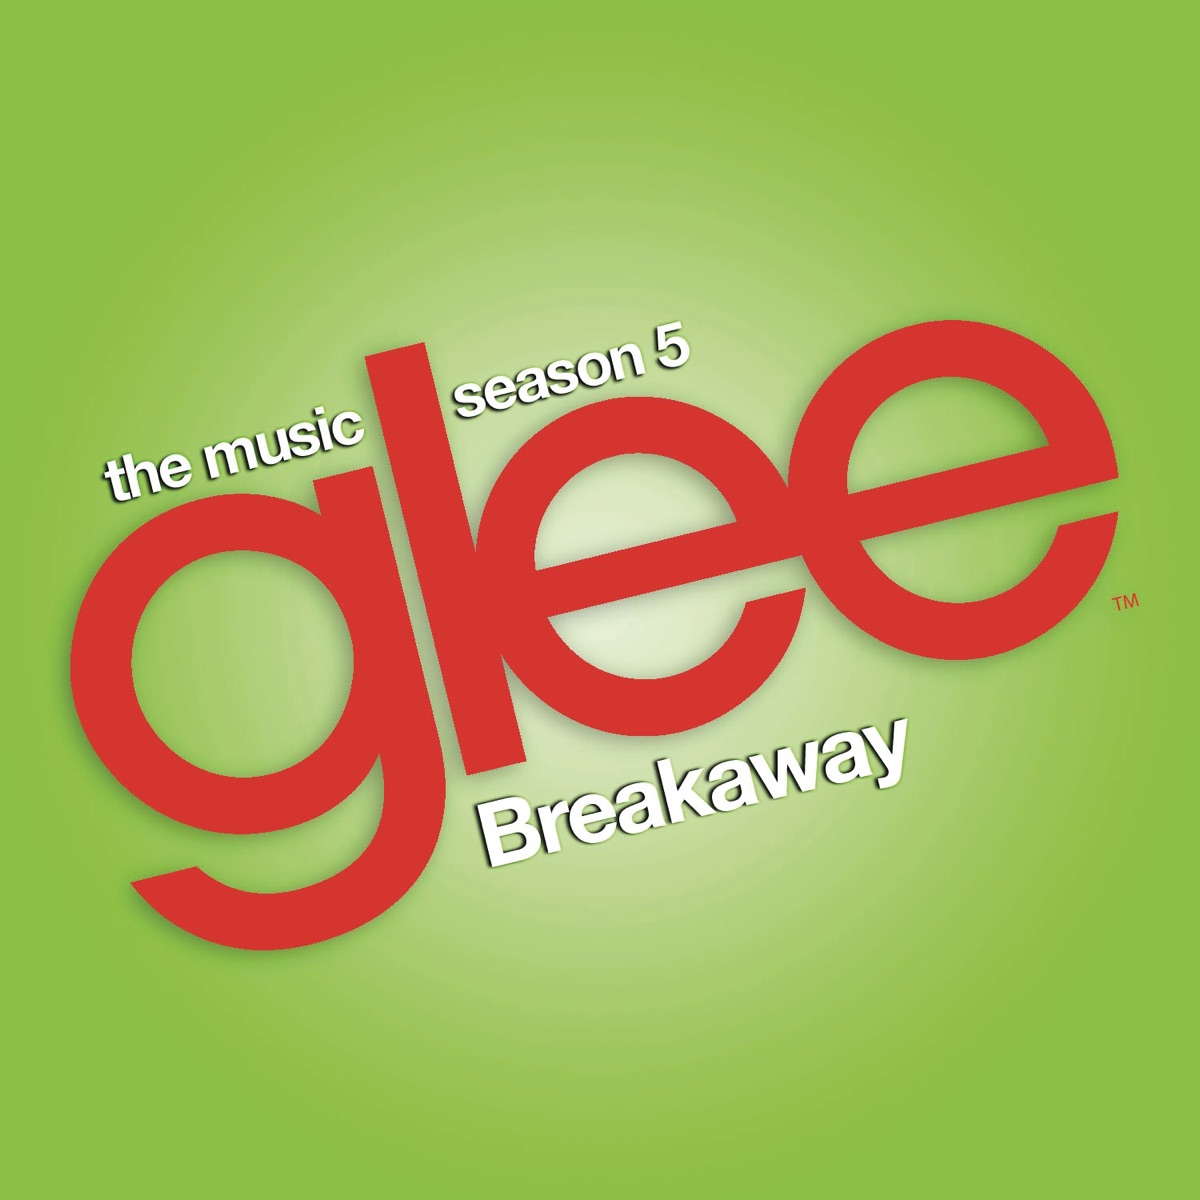 Breakaway (Glee Cast Version) - Single by Glee Cast on Apple Music